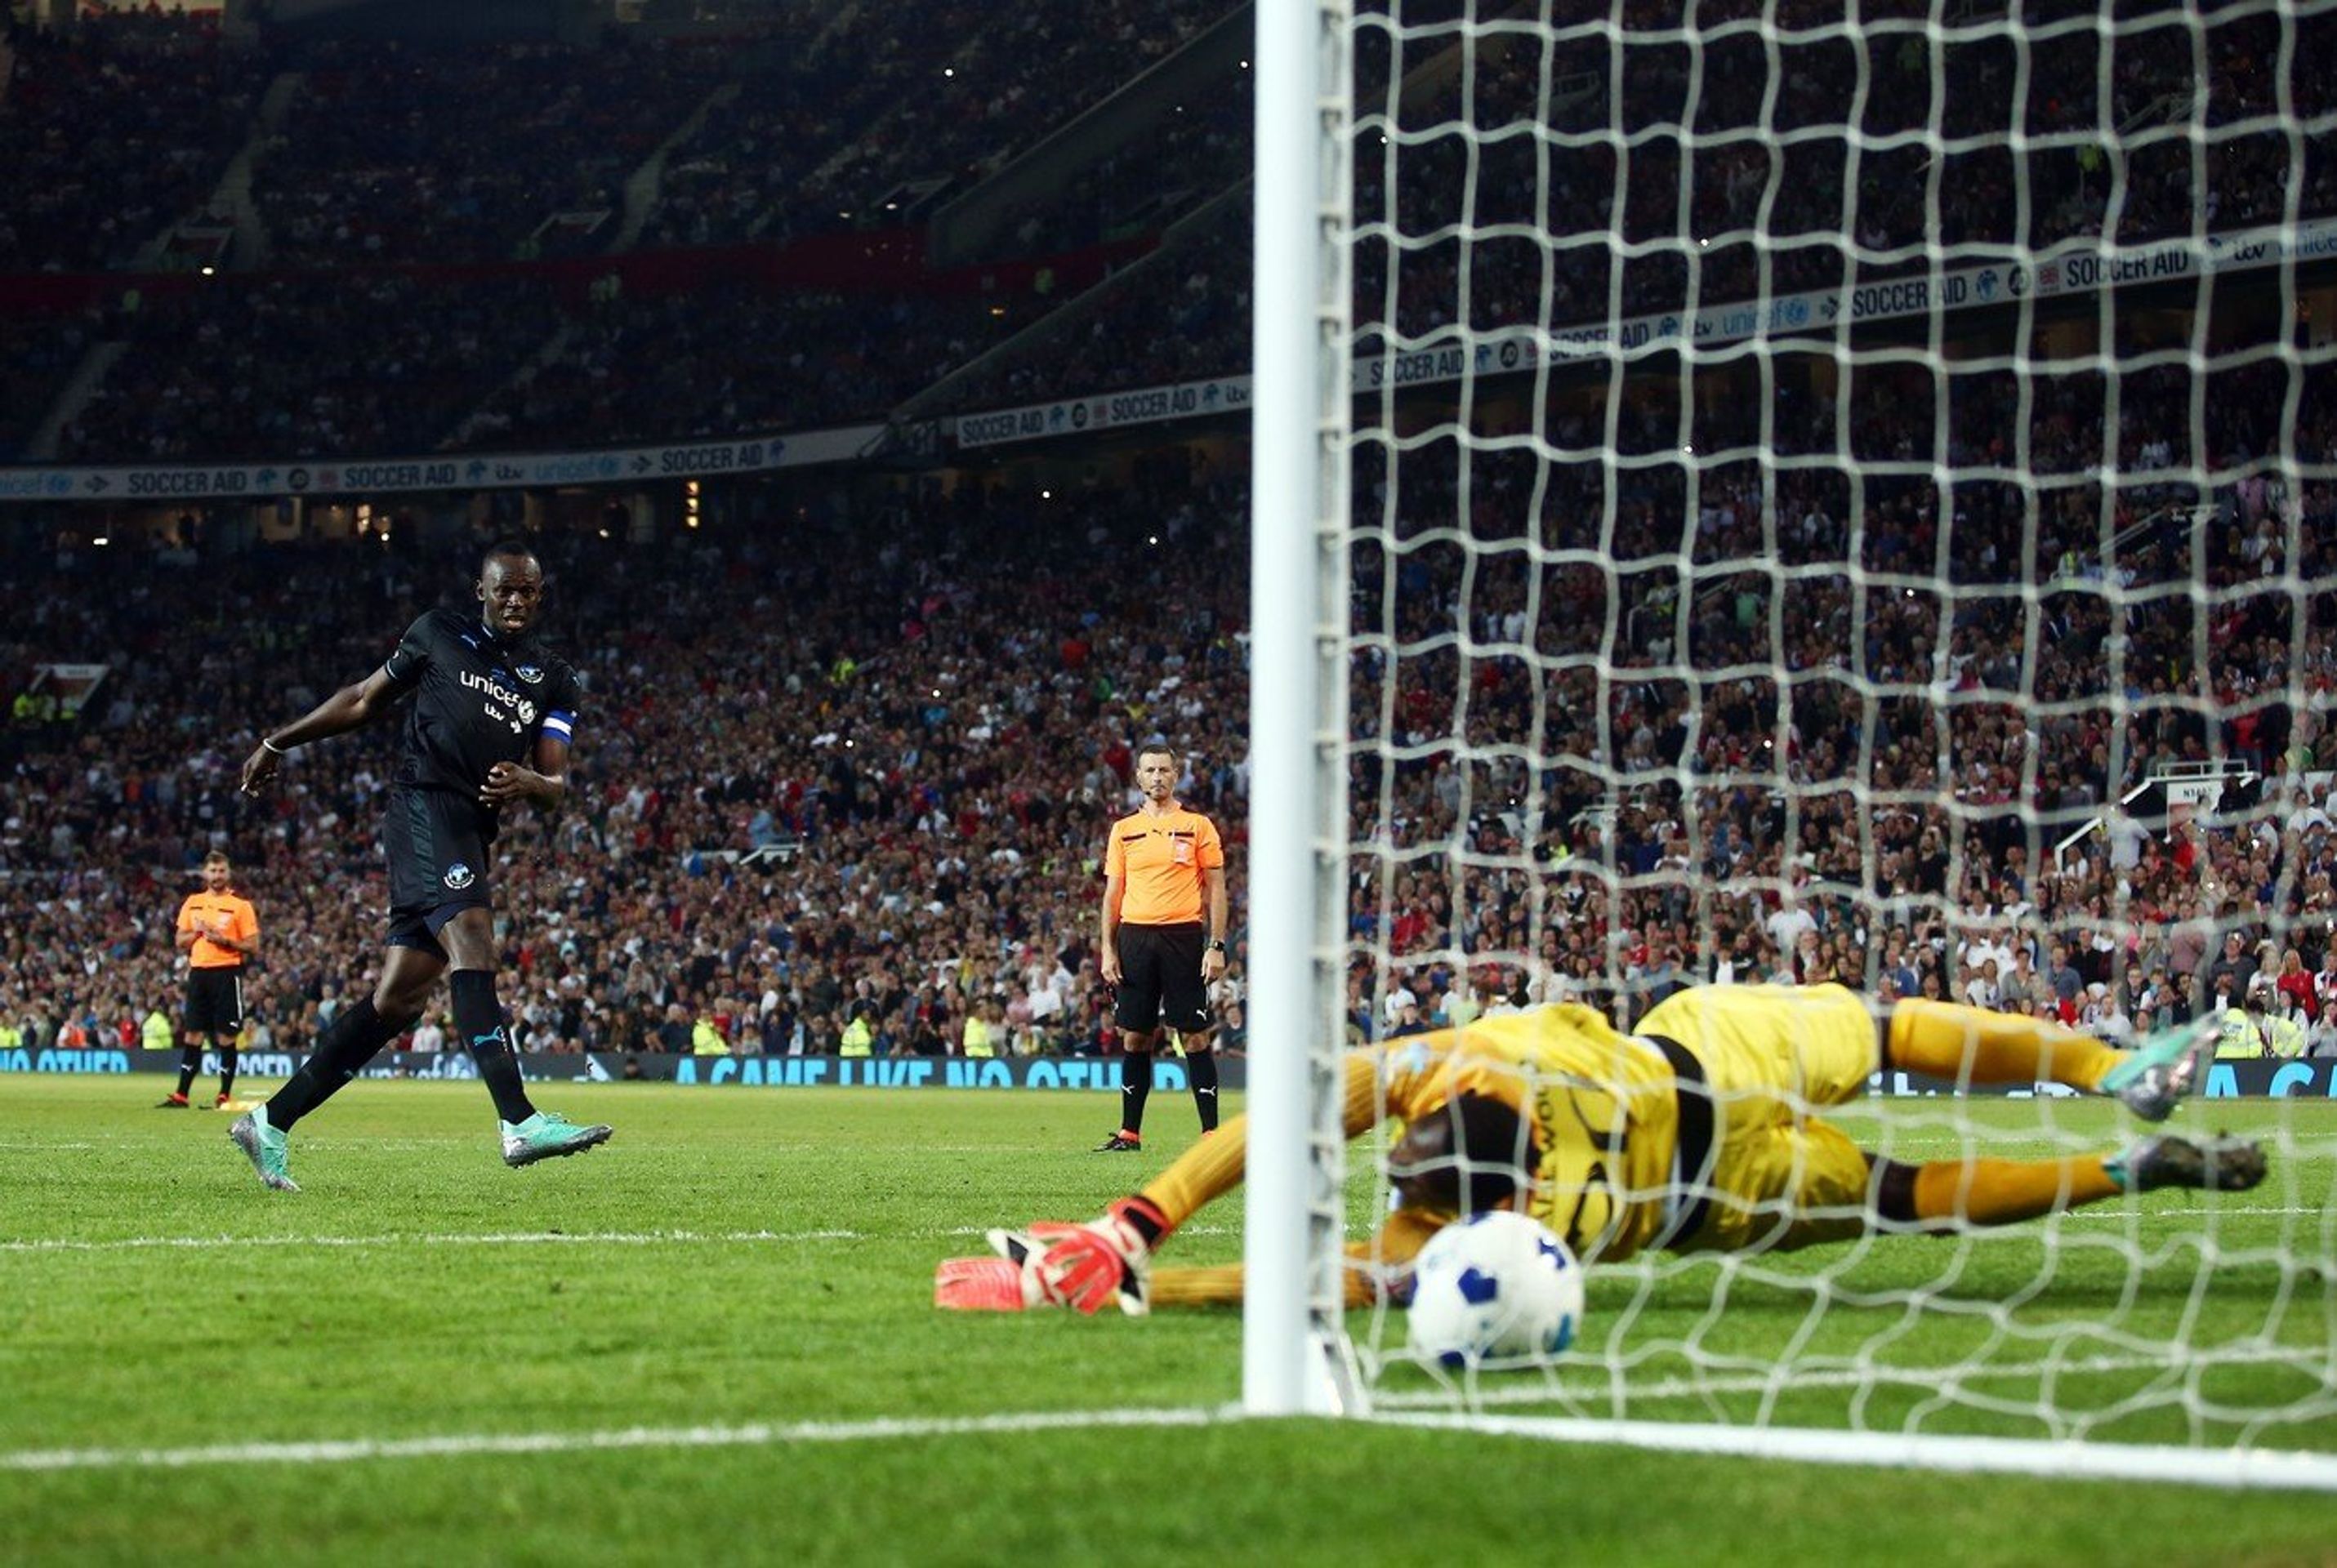 Usain Bolt - GALERIE: Usain Bolt si zahrál fotbal na slavném Old Trafford (4/4)